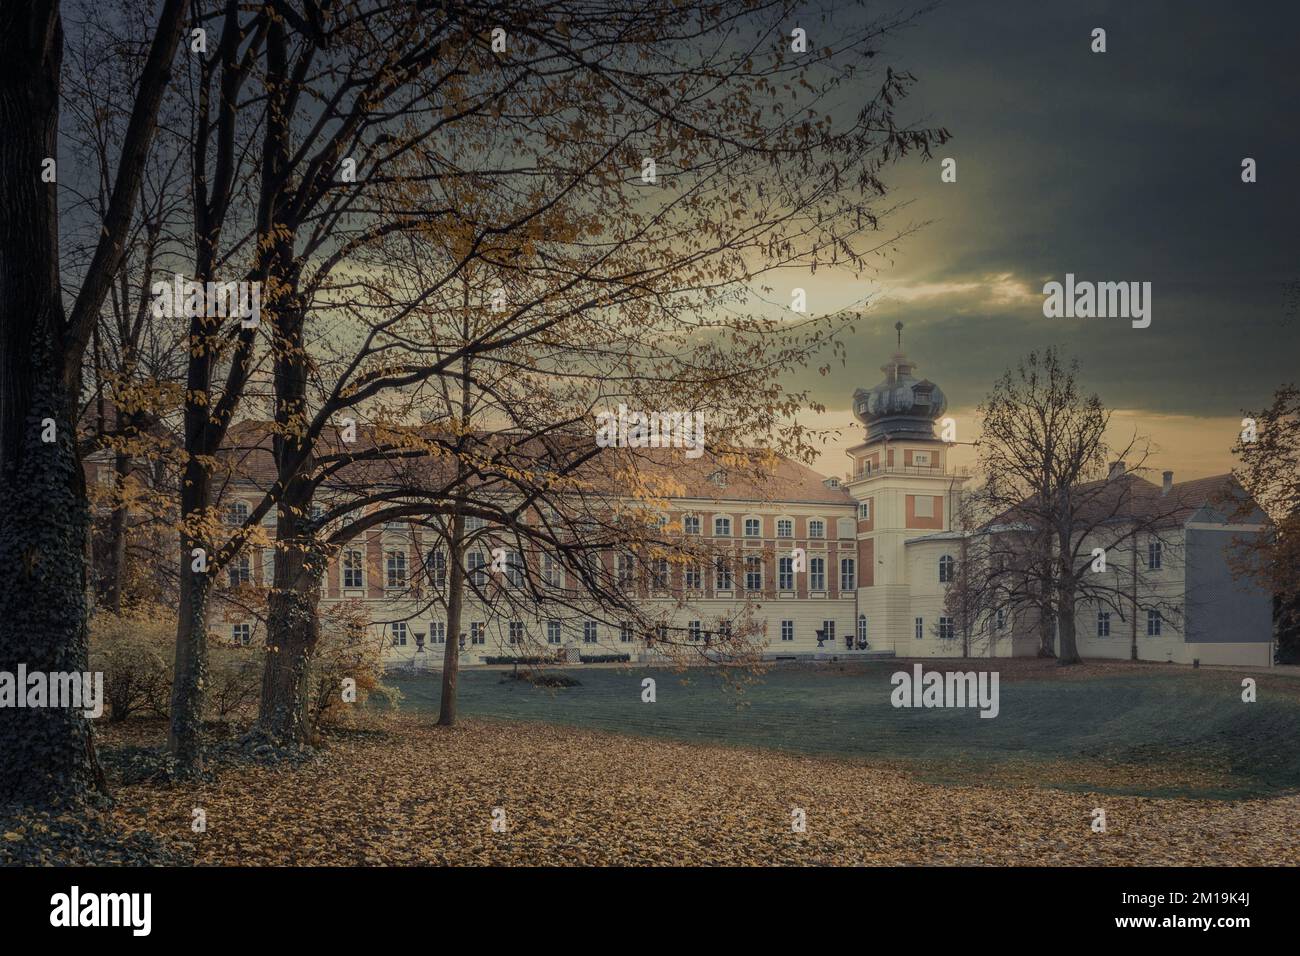 Lancut Castle - former residence of magnates in Lancut, Subcarpathian Voivodeship, Poland. Stock Photo